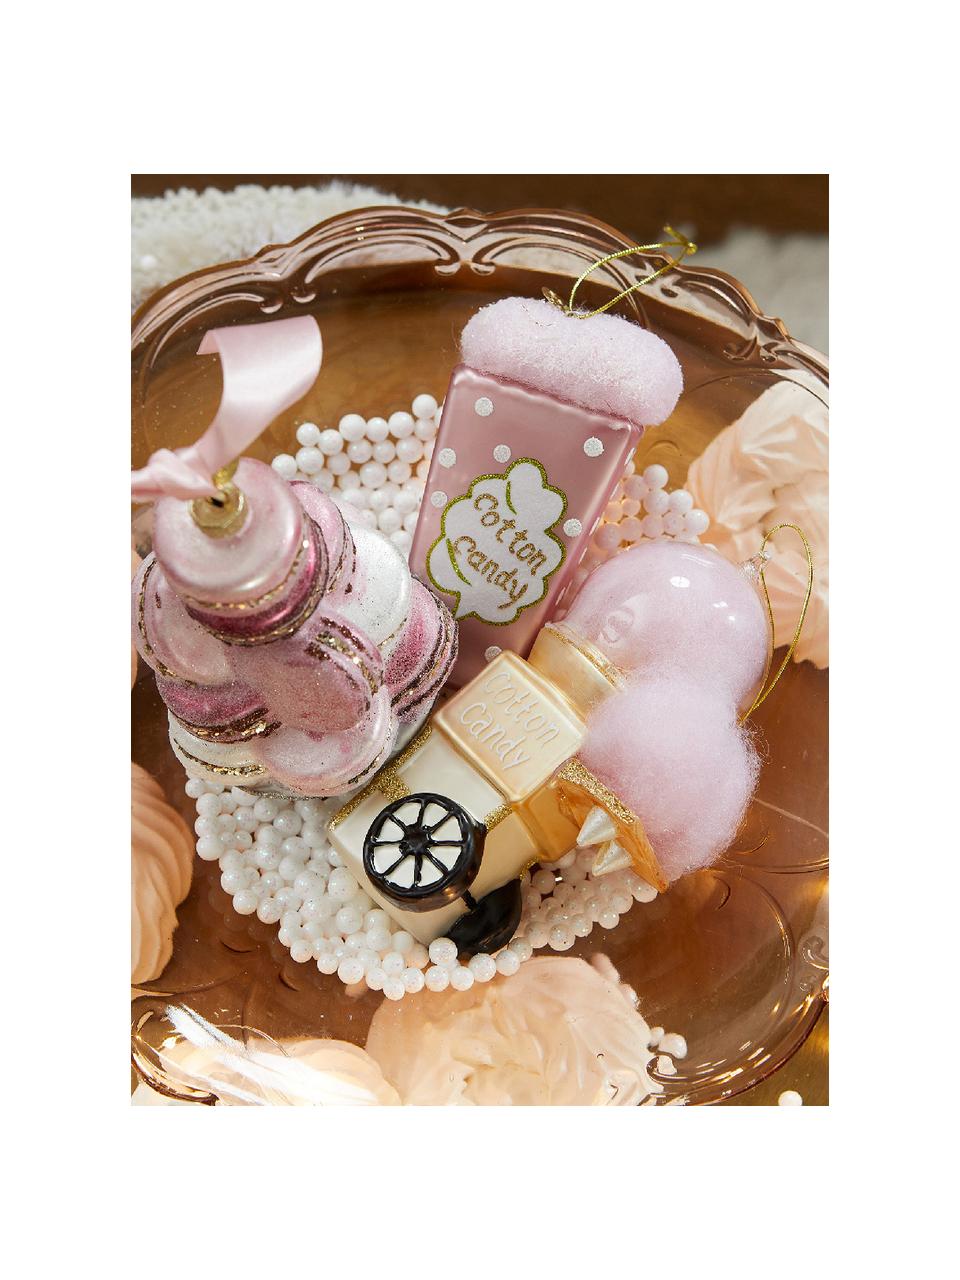 Baumanhänger Cotton Candy, 2er-Set, Glas, Rosatöne, Goldfarben, B 8 x H 14 cm